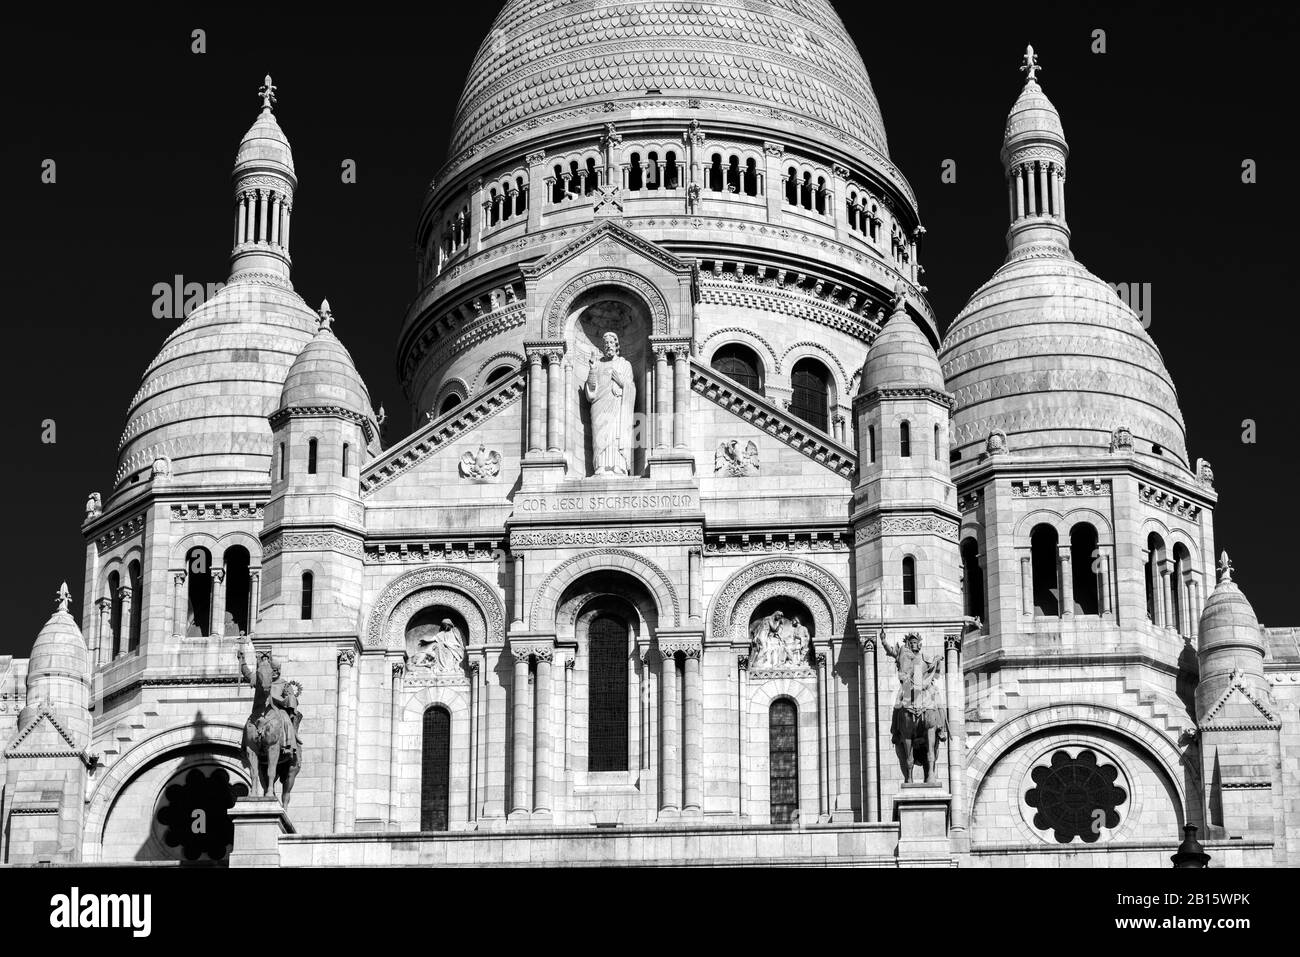 The Basilica of the Sacred Heart of Jesus (Basilique du Sacre-Coeur) on Montmartre hill, Paris Stock Photo